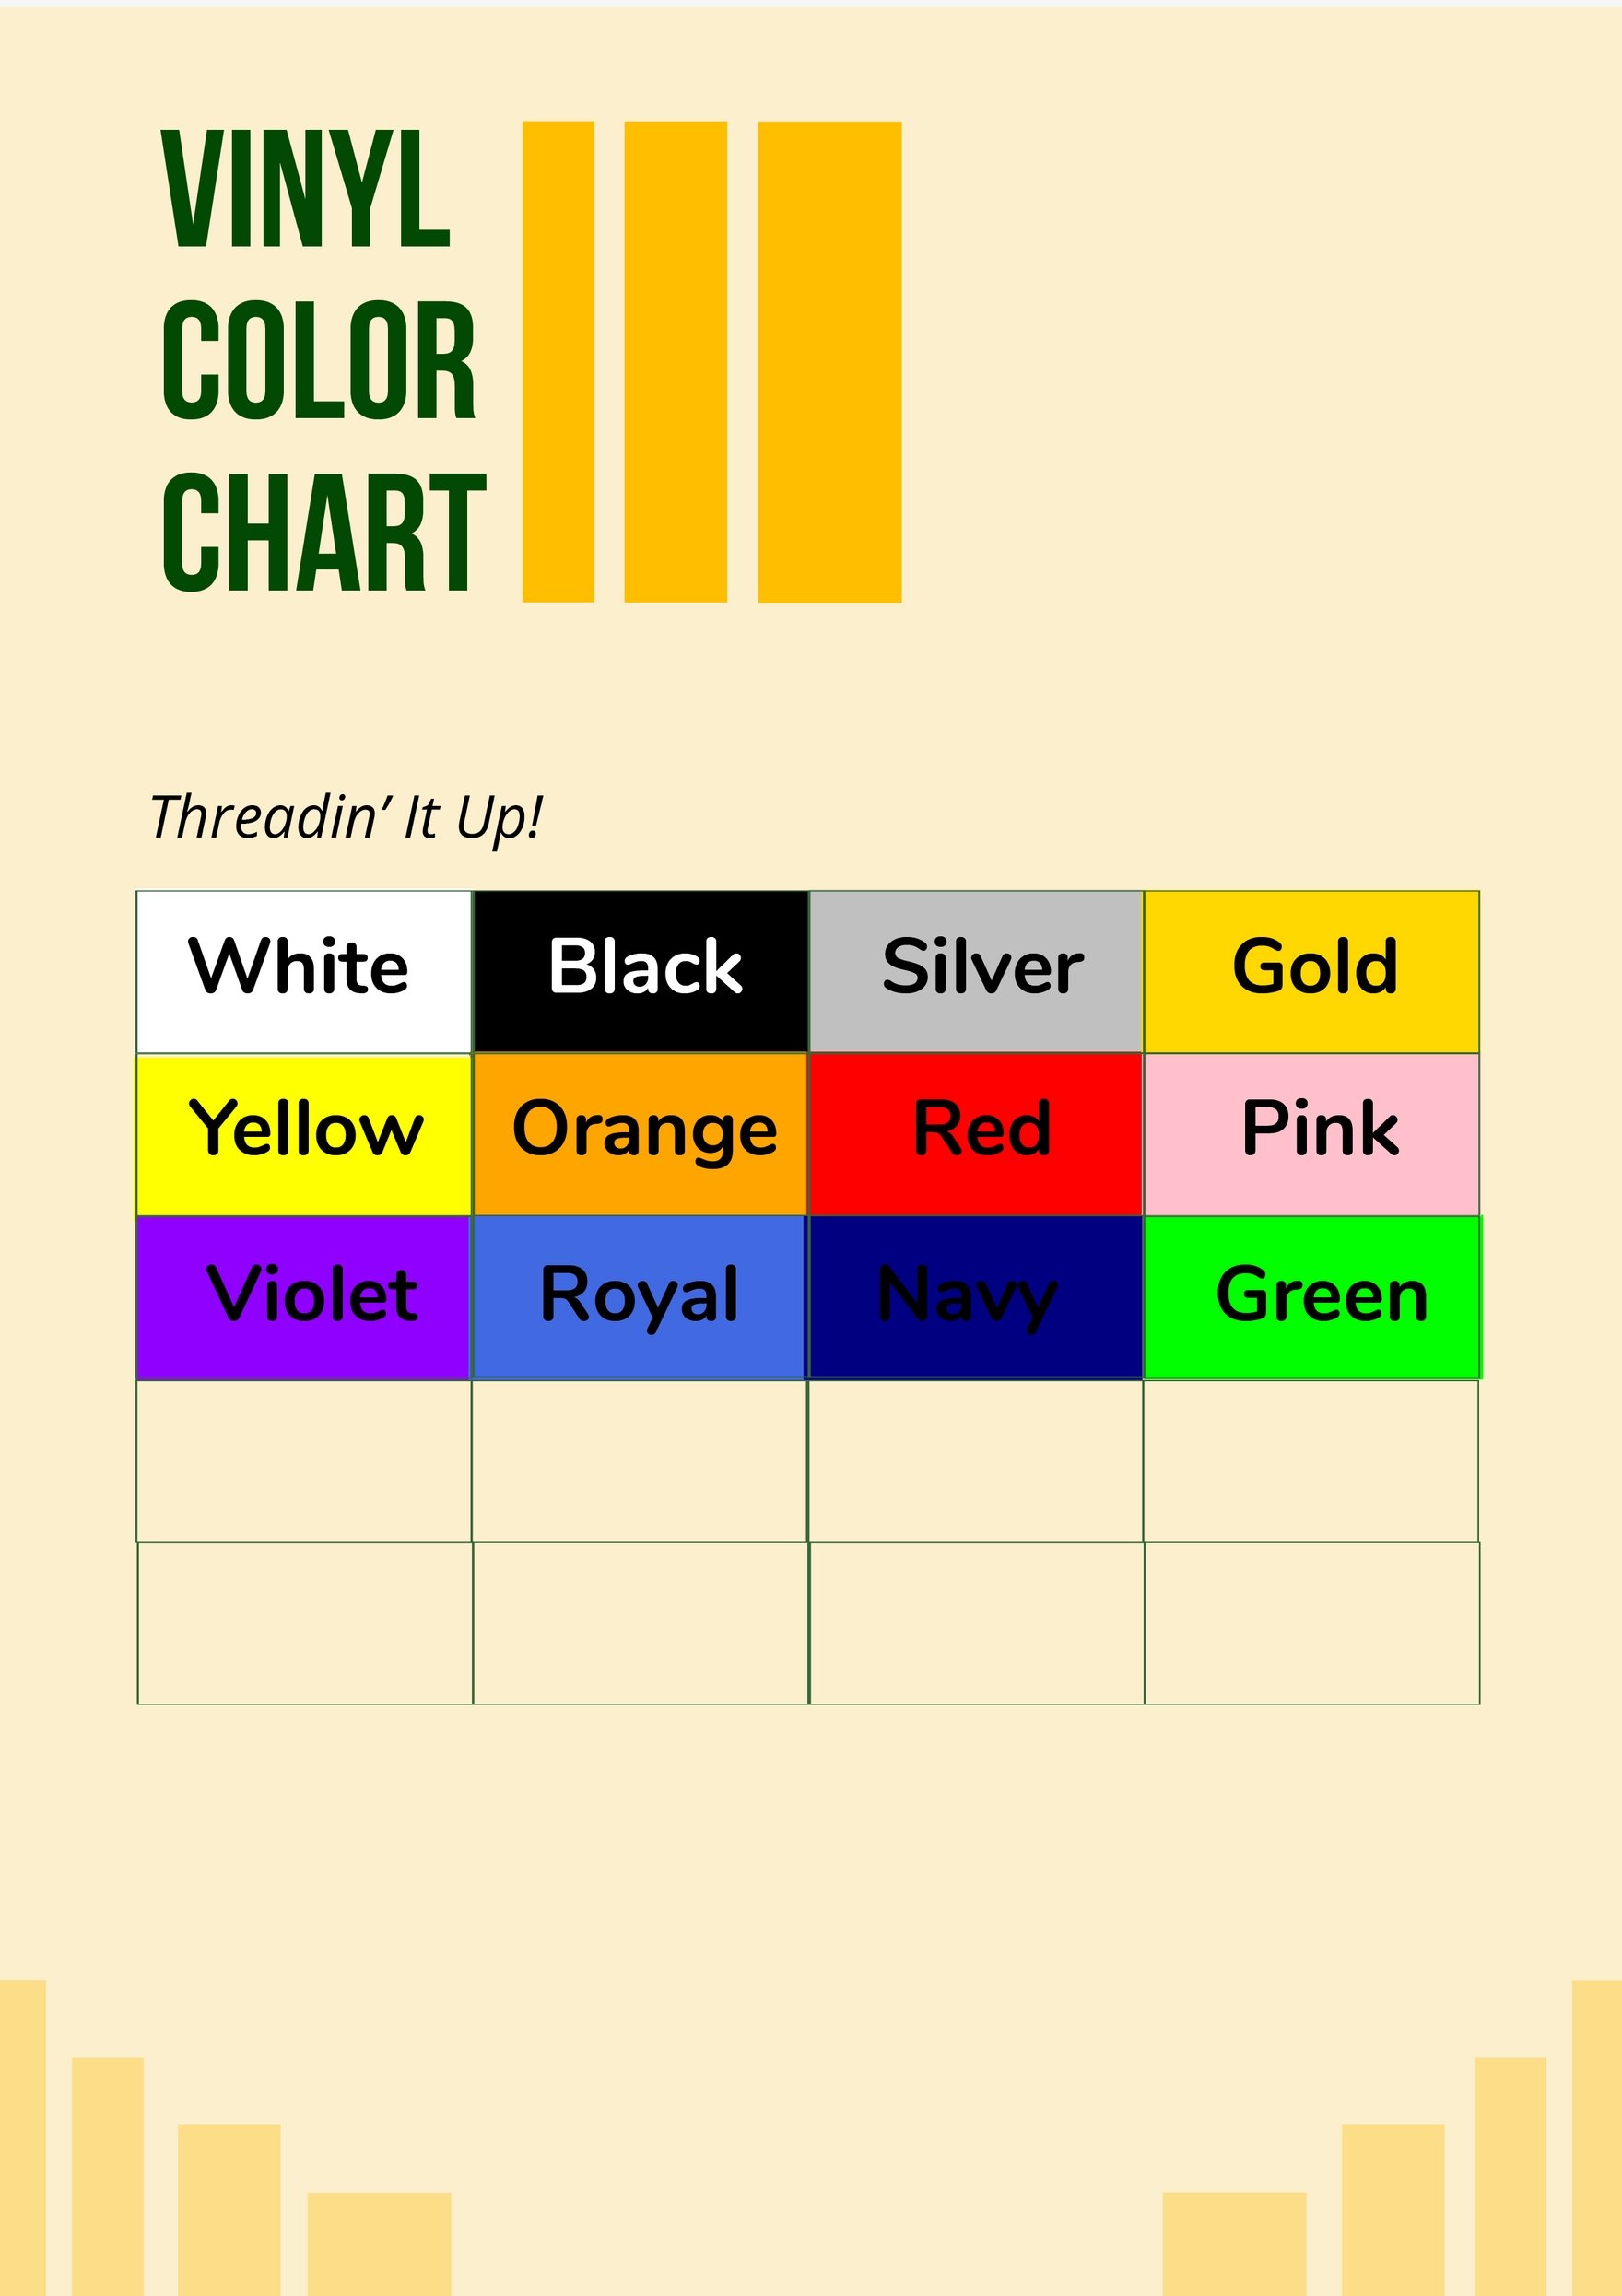 Vinyl color chart